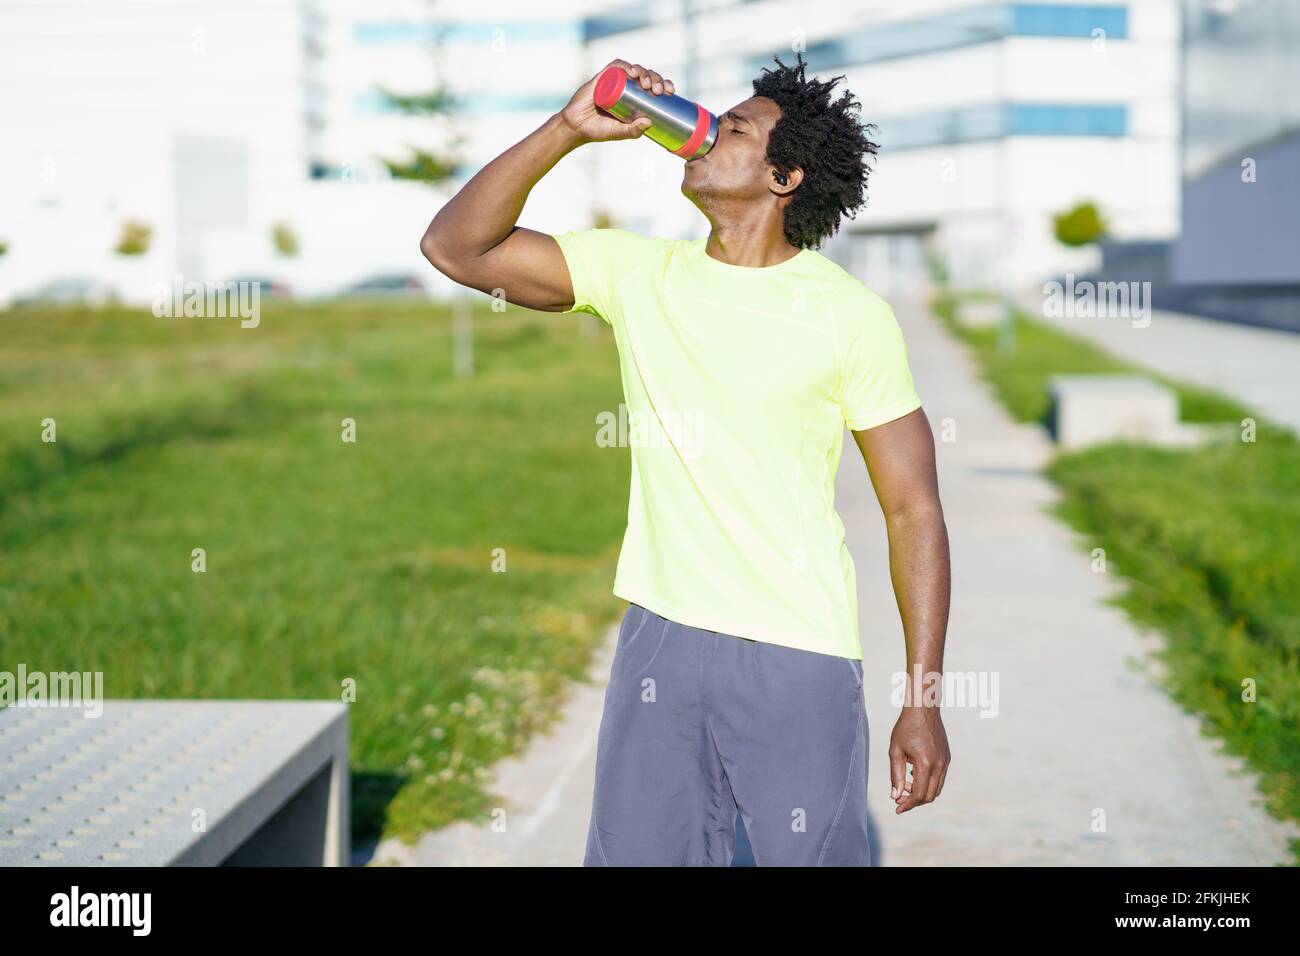 Black man drinking during exercise. Runner taking a hydration break. Stock Photo